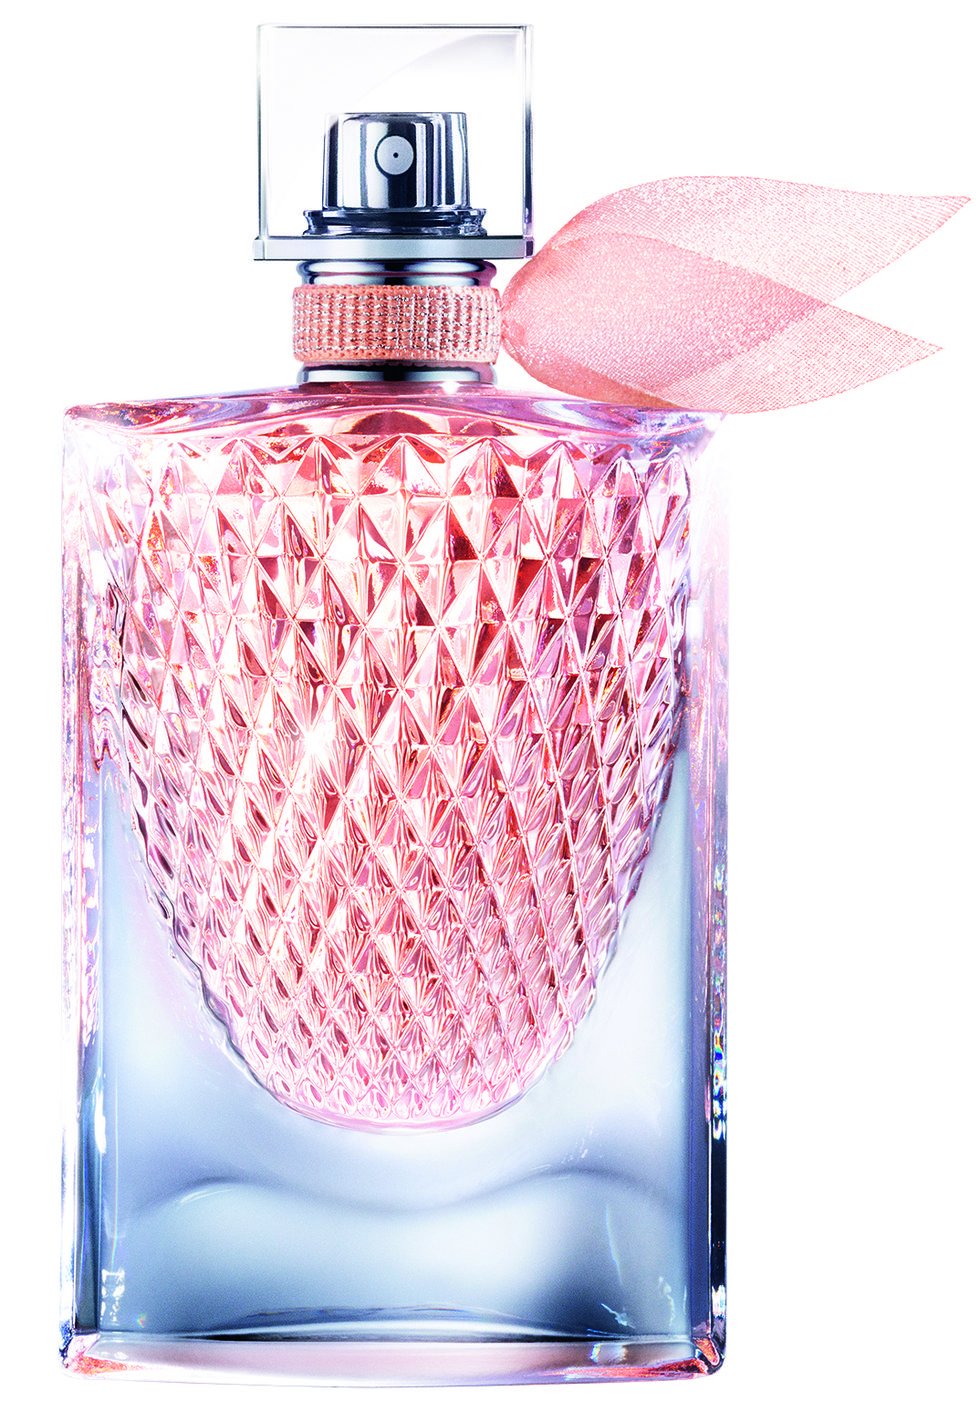 Perfume, Product, Pink, Cosmetics, Water, Liquid, Spray, Fluid, Glass, 